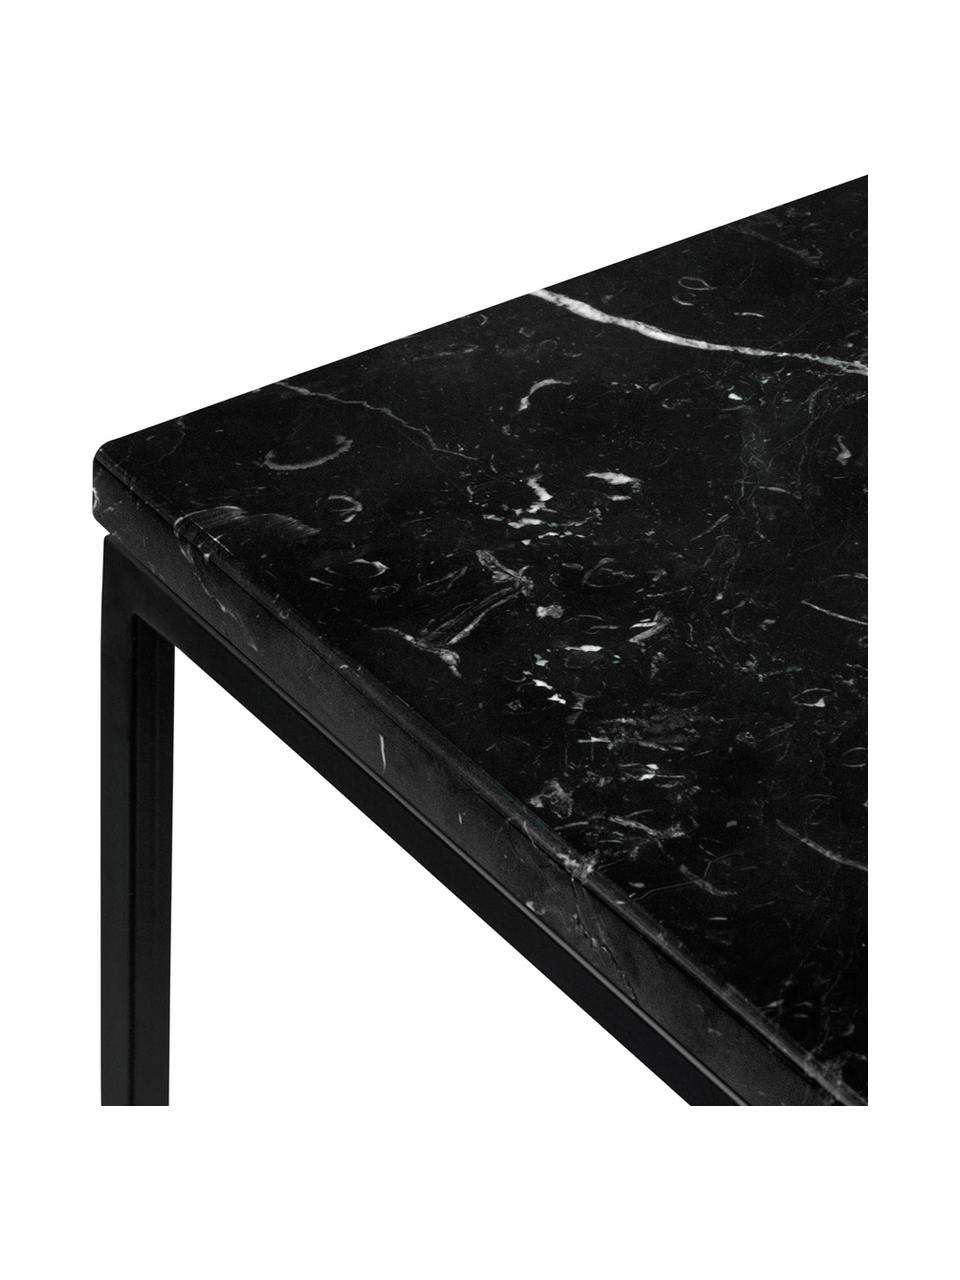 Mramorový odkládací stolek Gleam, Deska stolu: černá, mramorovaná Rám: černá